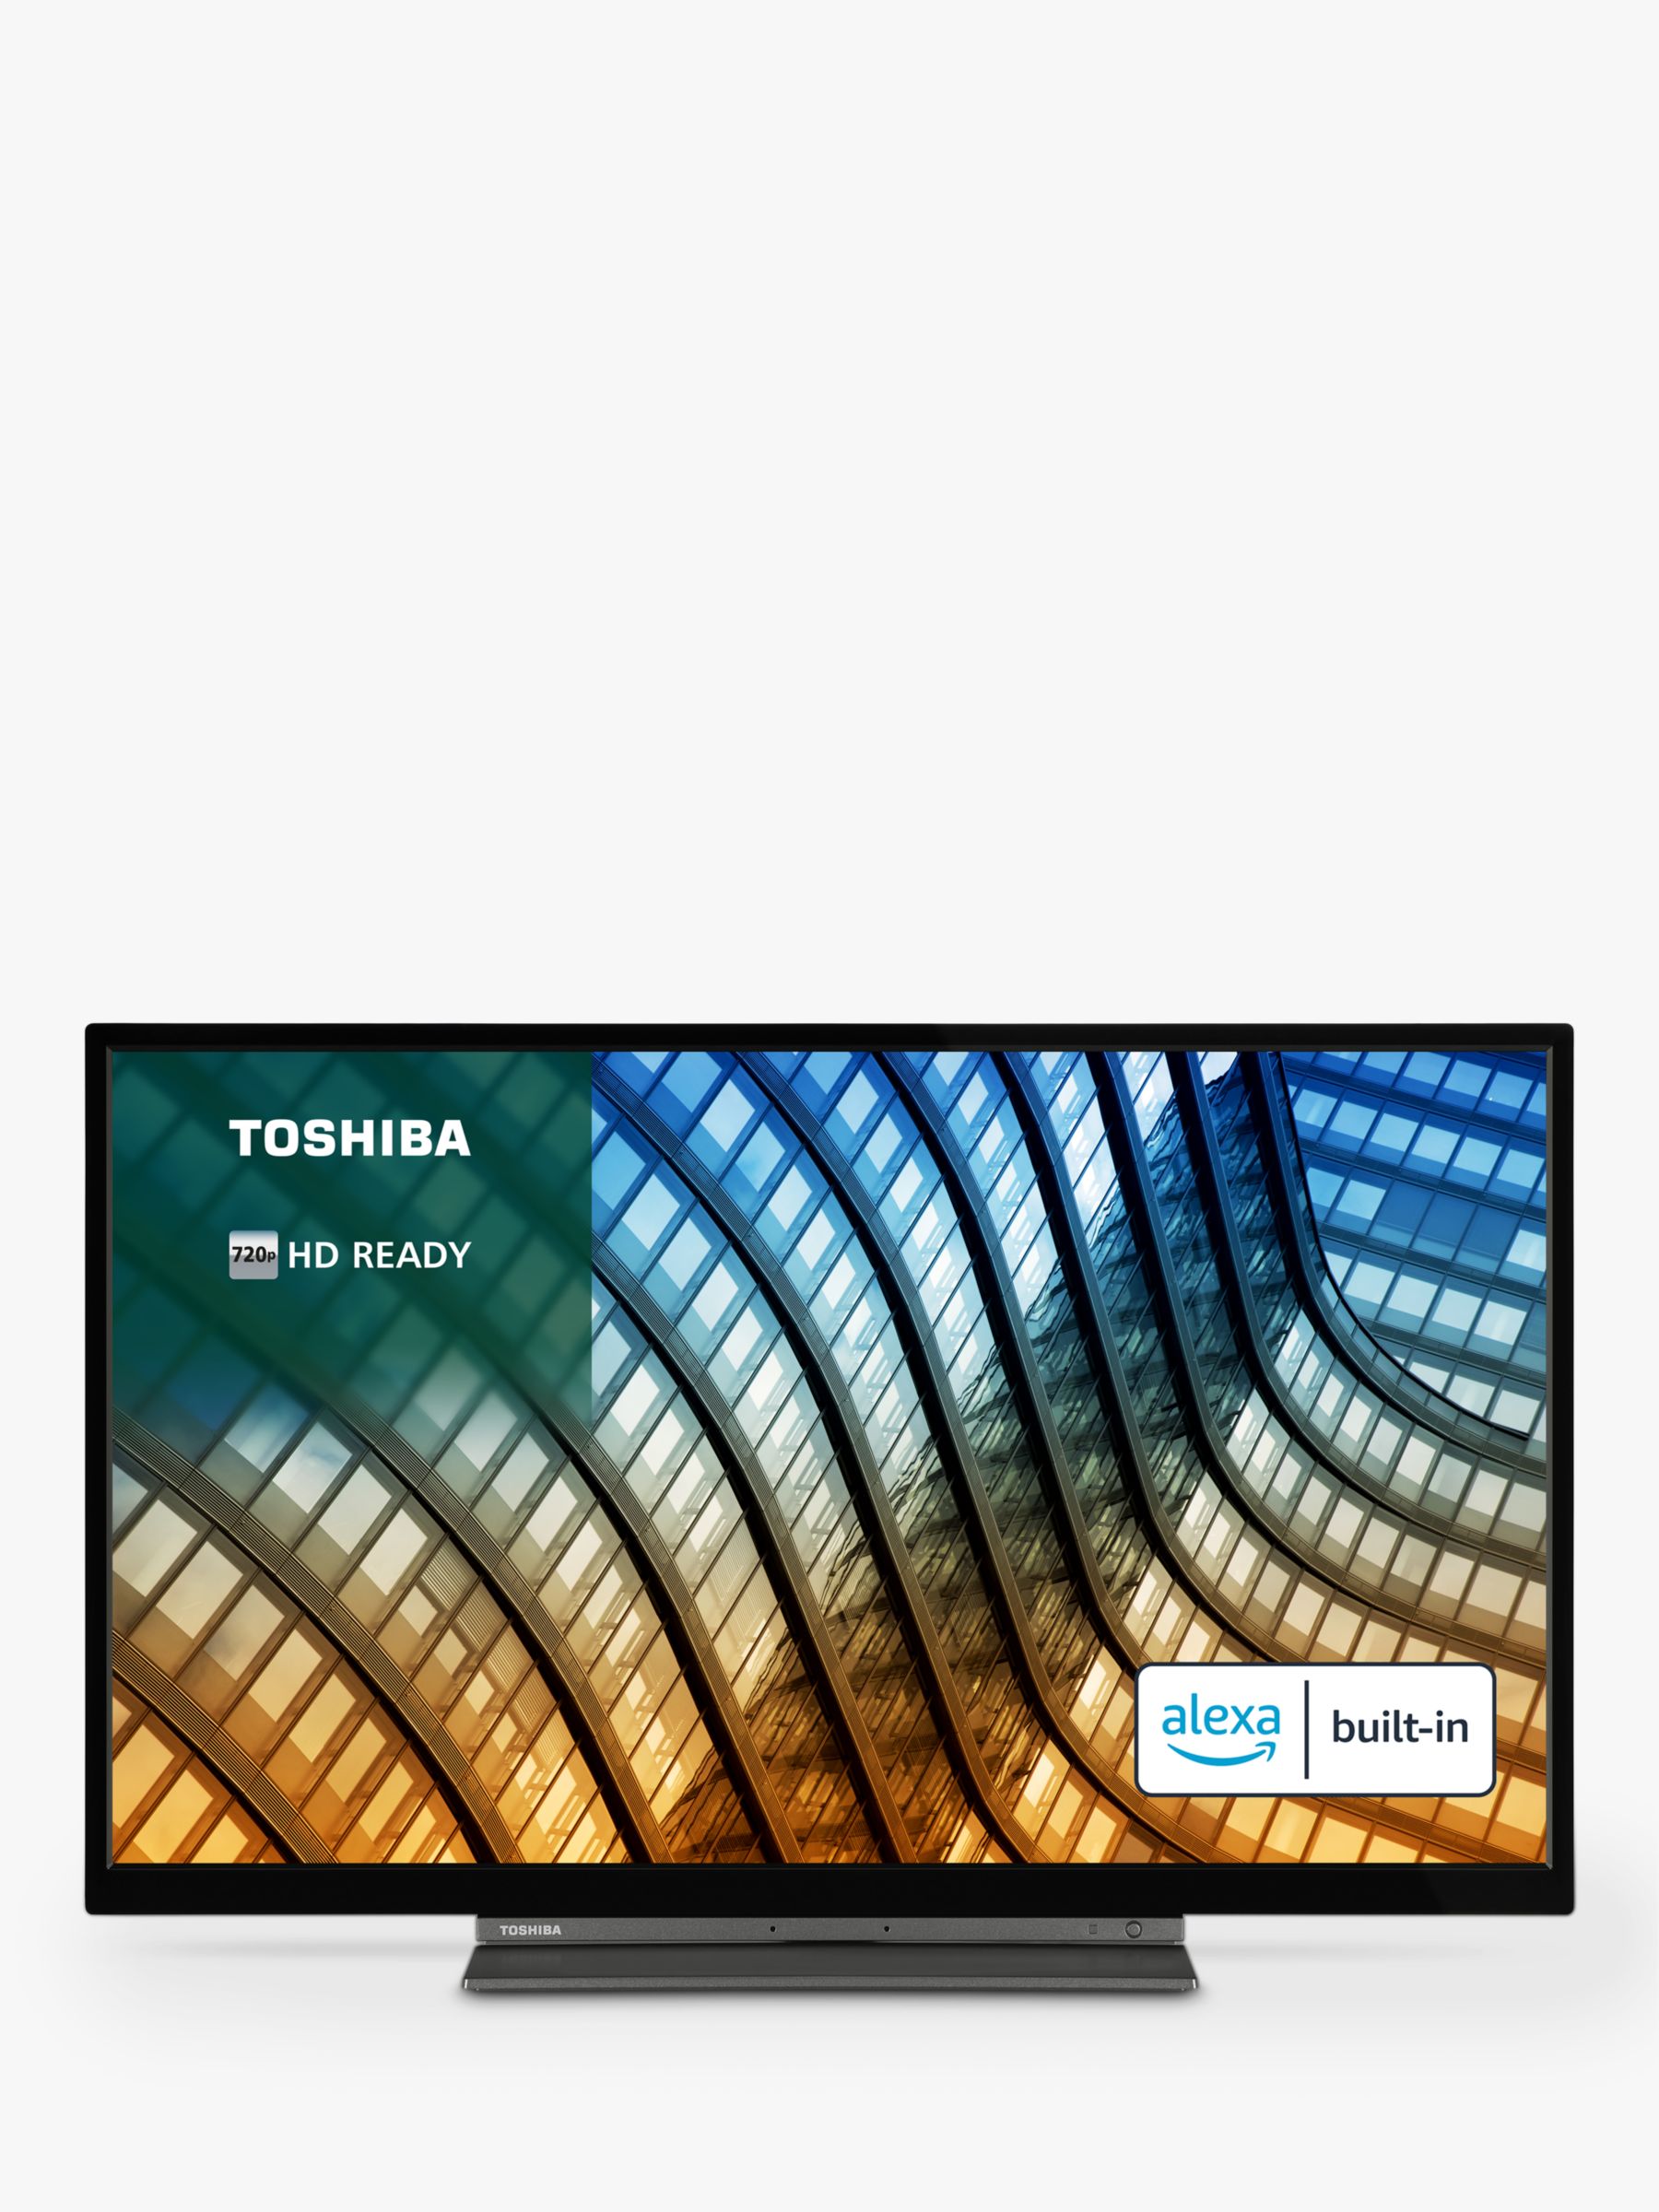 download app on toshiba smart tv｜TikTok Search